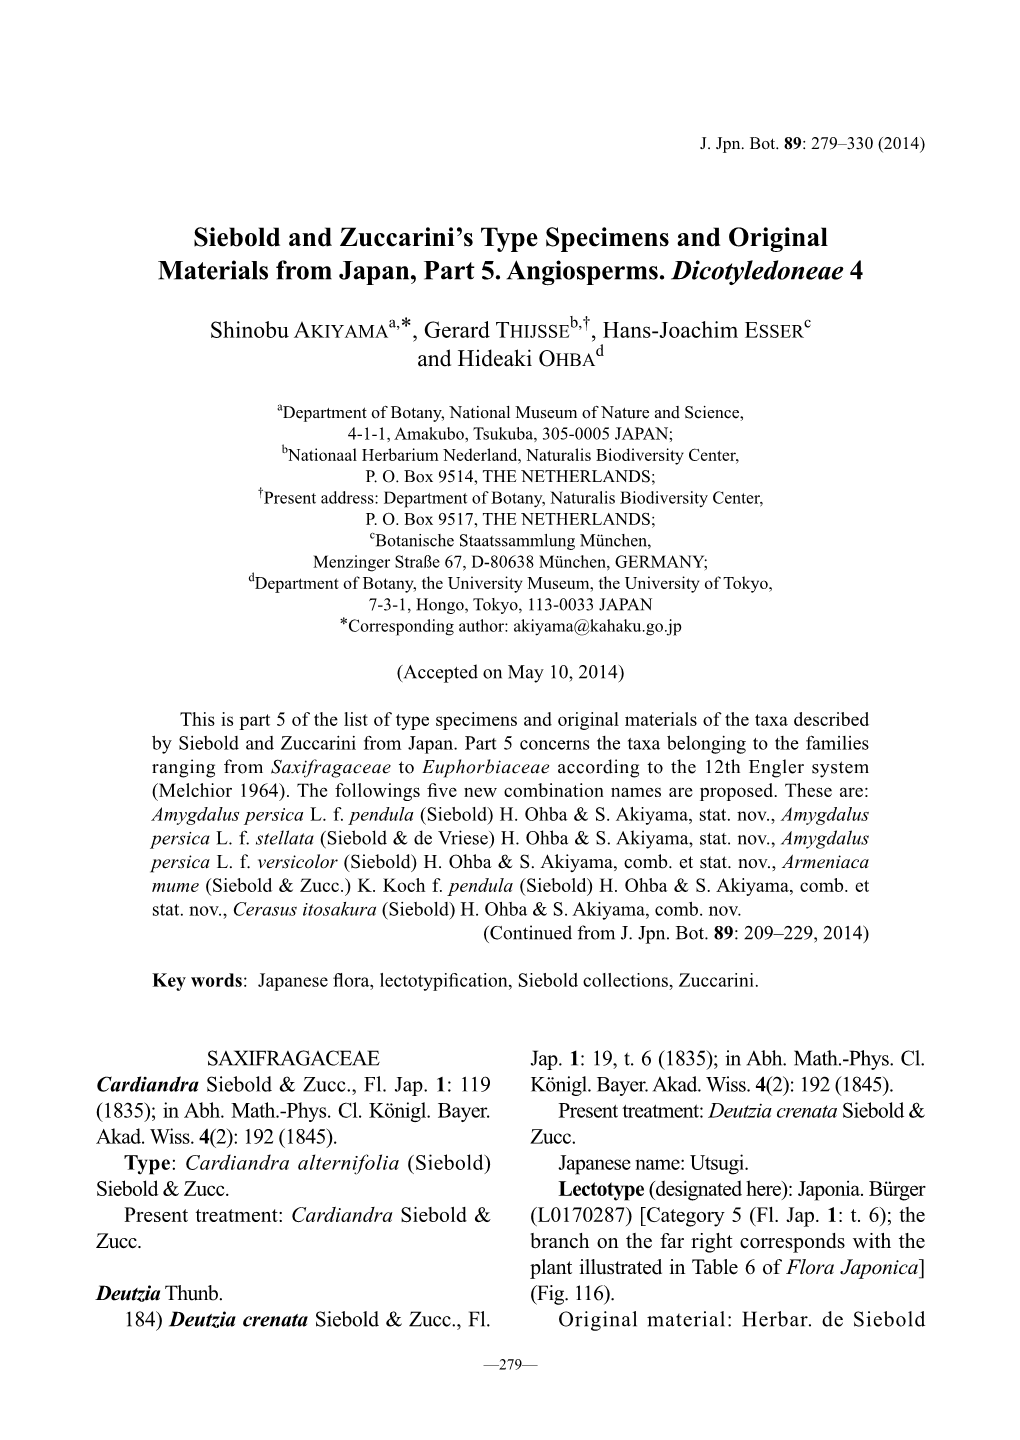 Siebold and Zuccarini's Type Specimens and Original Materials